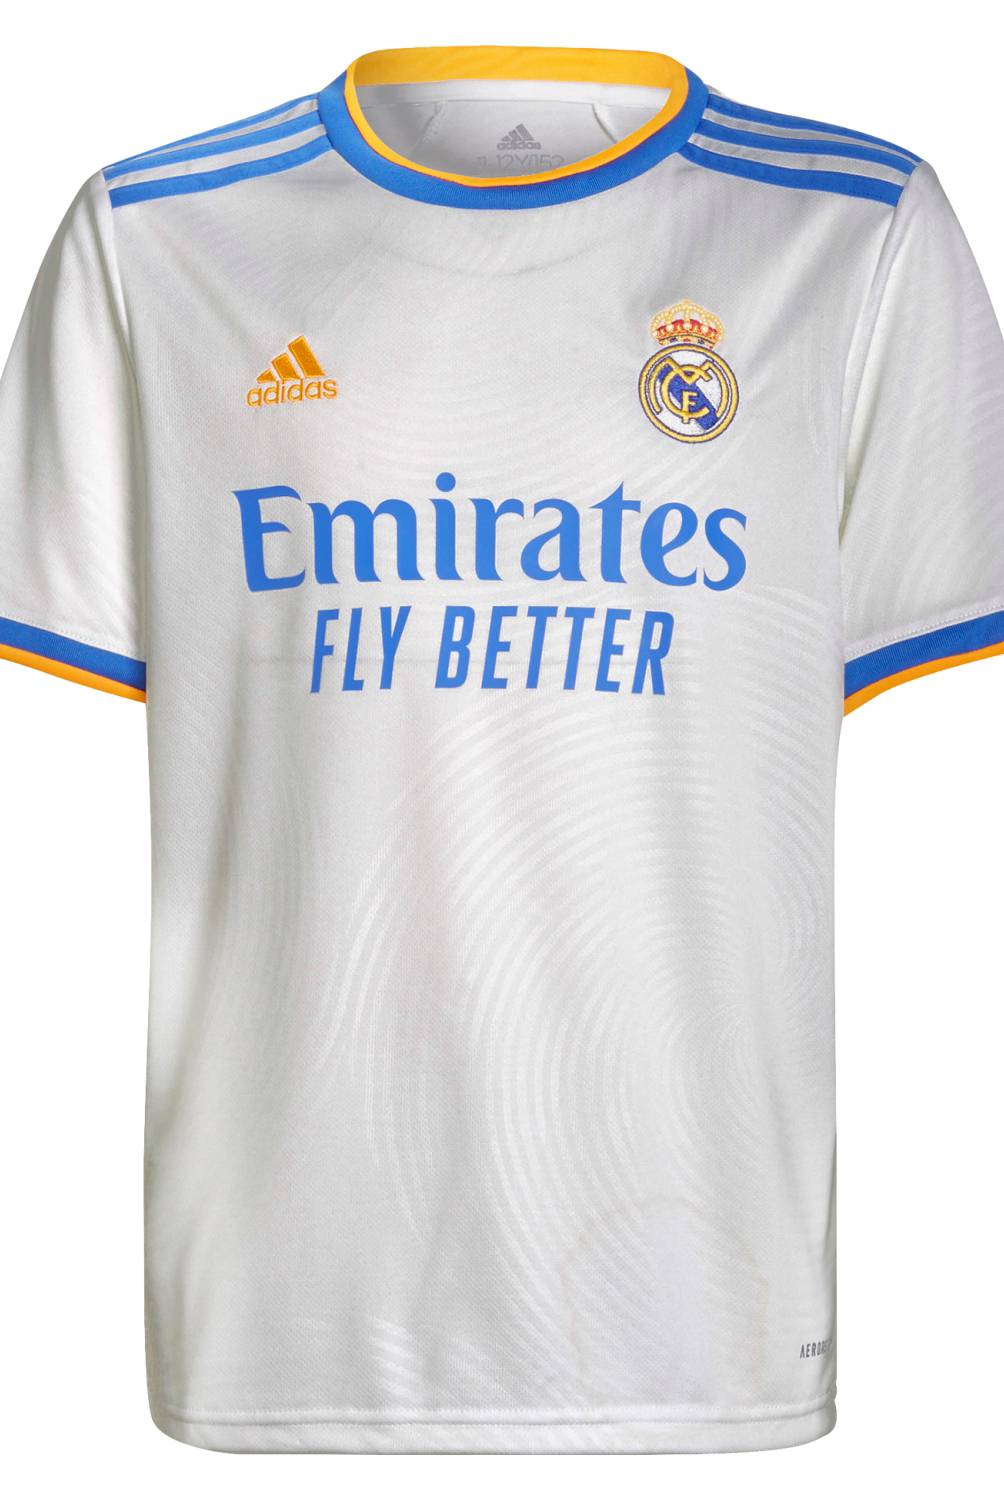 Adidas - Adidas Camiseta de Fútbol Real Madrid Local Niño